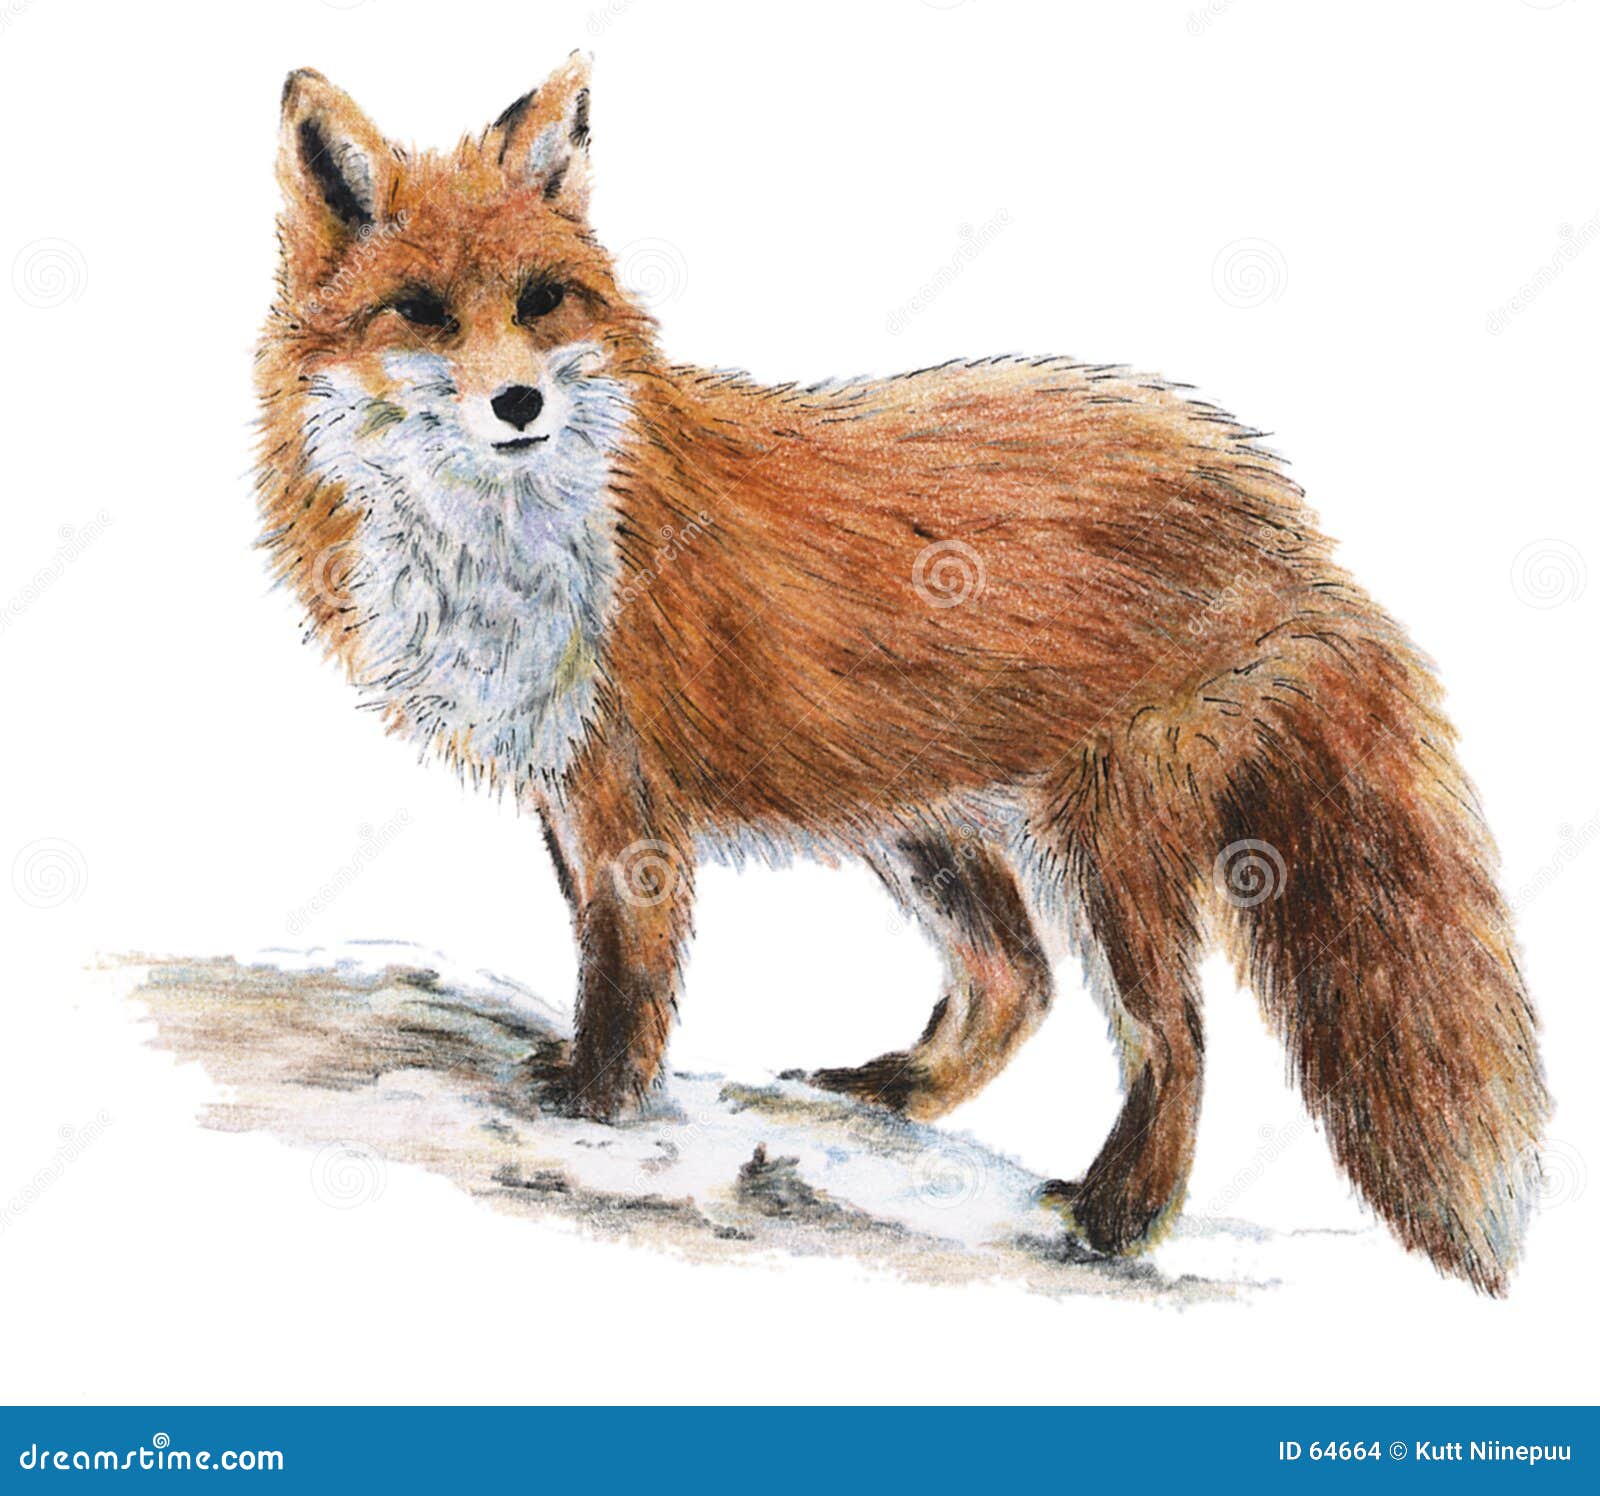 drawn fox